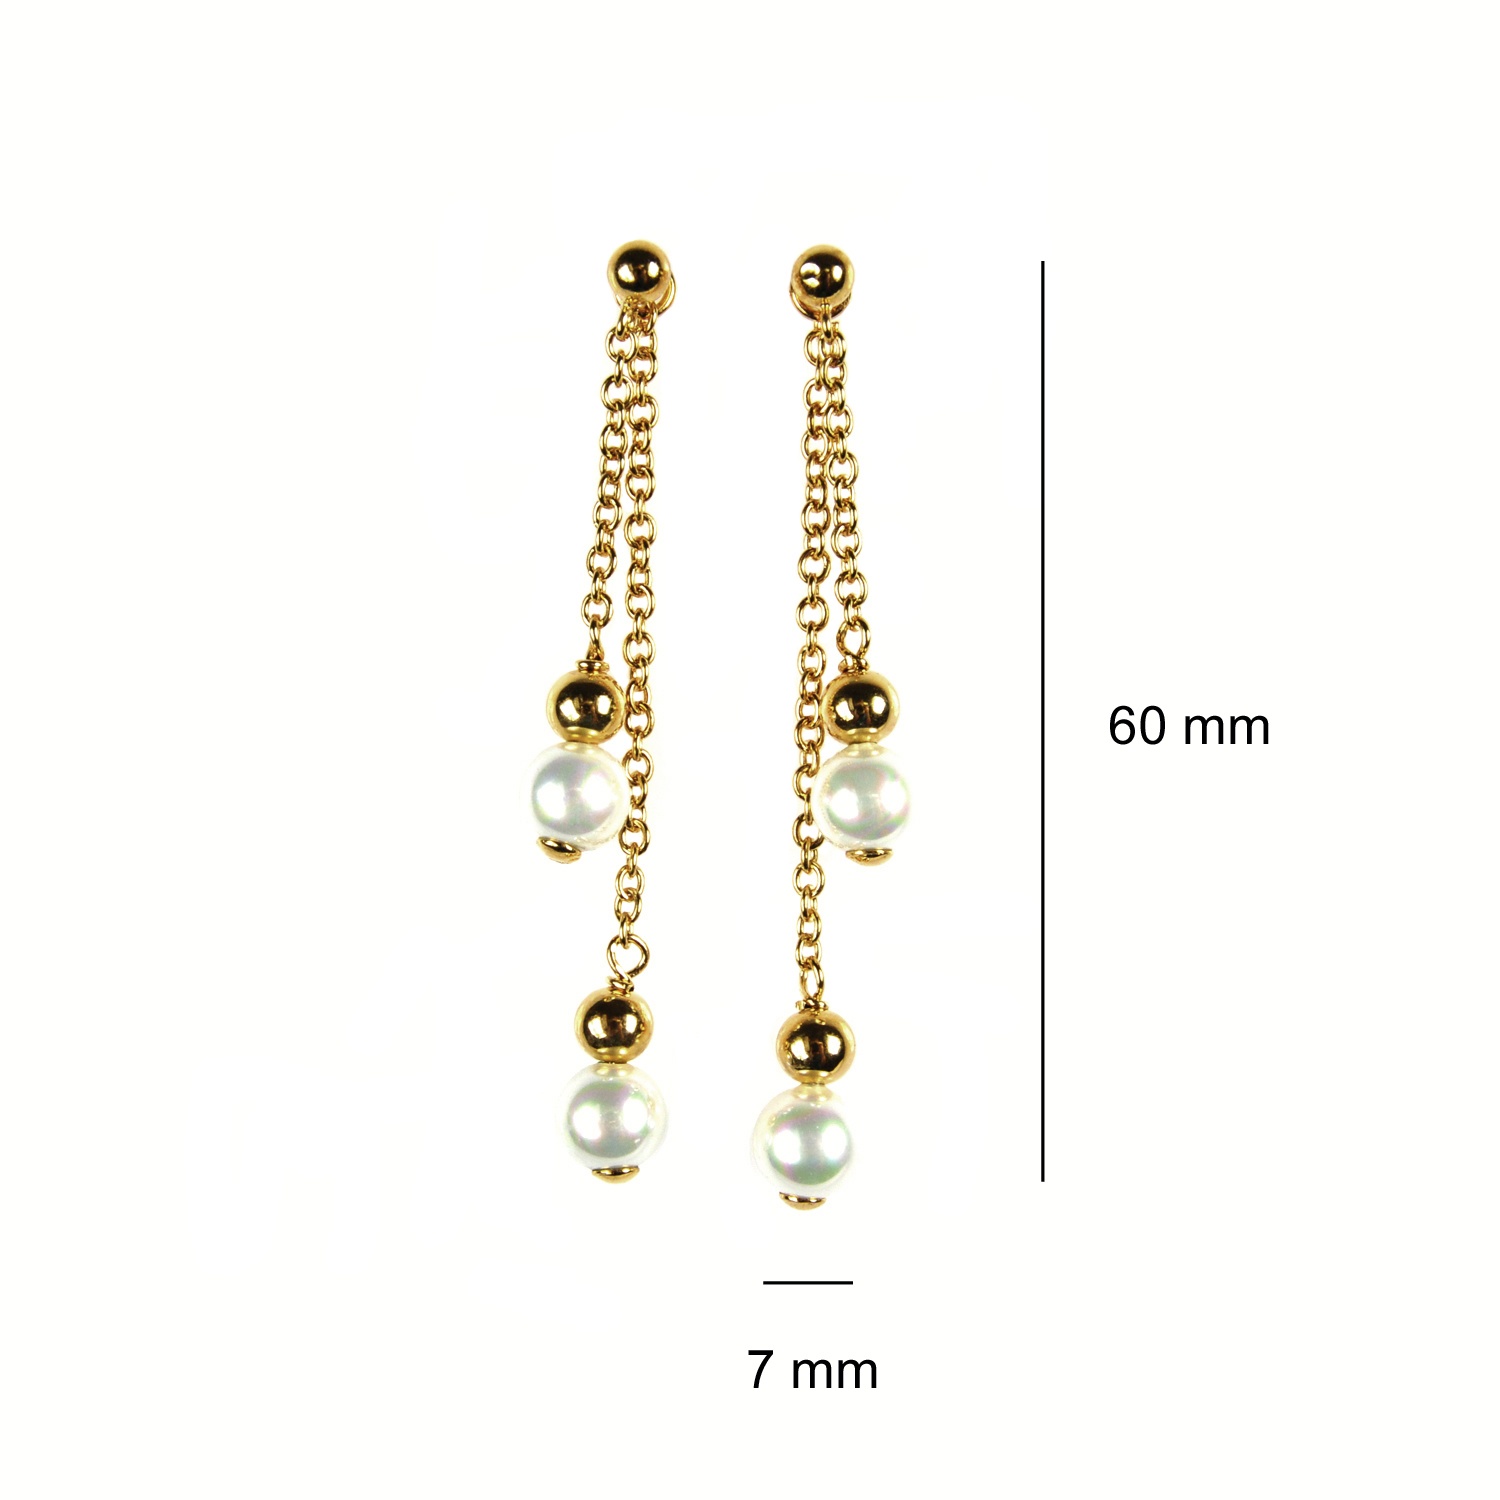 Goldplated earrings - 2 in 1 4